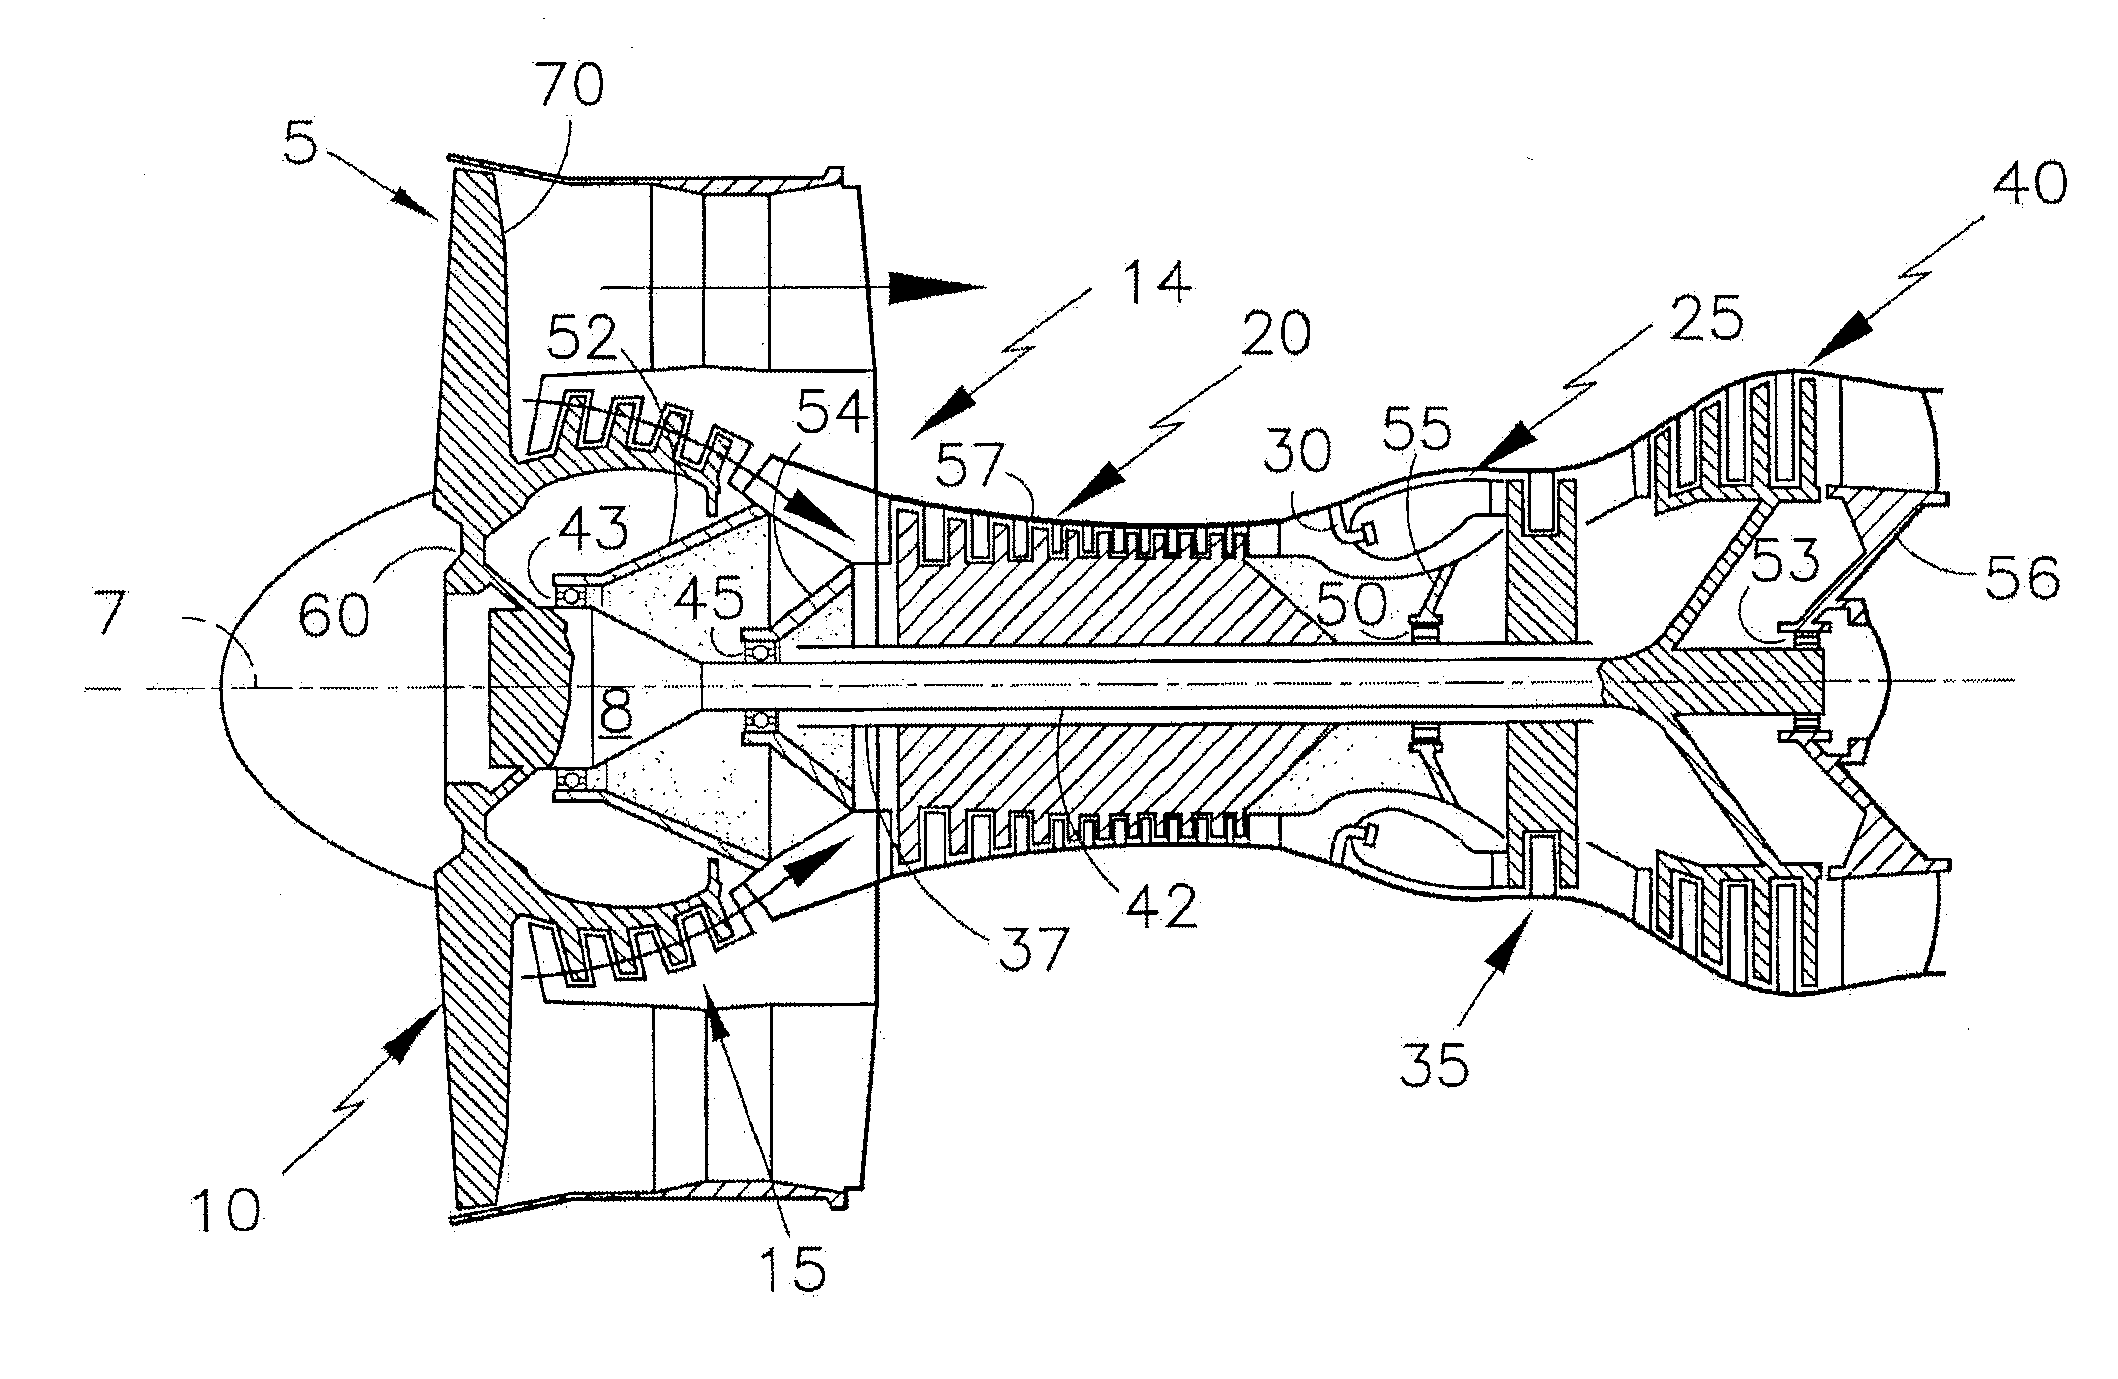 Gas turbine engine blade mounting arrangement